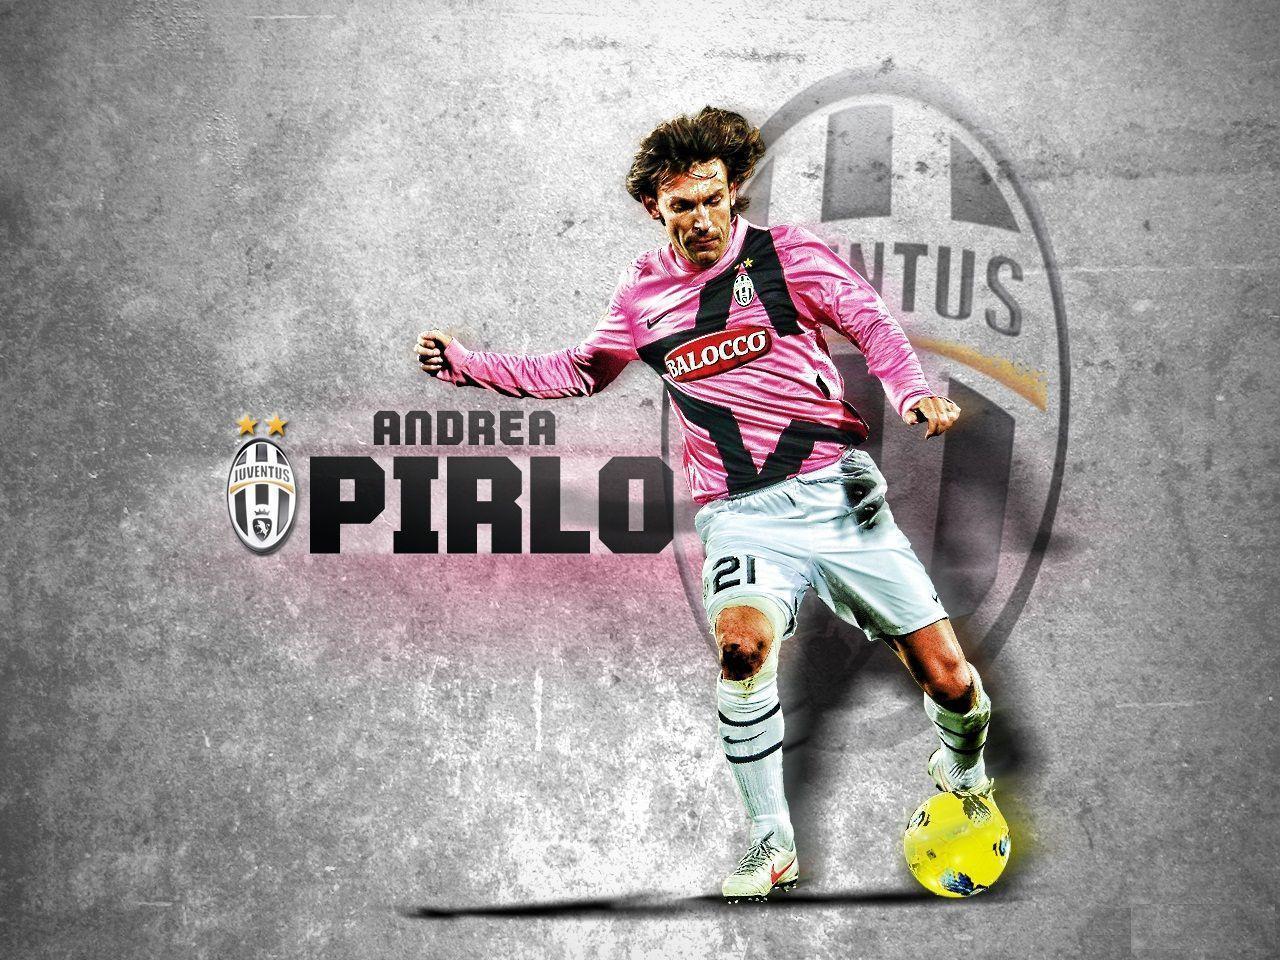 Andrea pirlo, Juventus fc and HD wallpaper